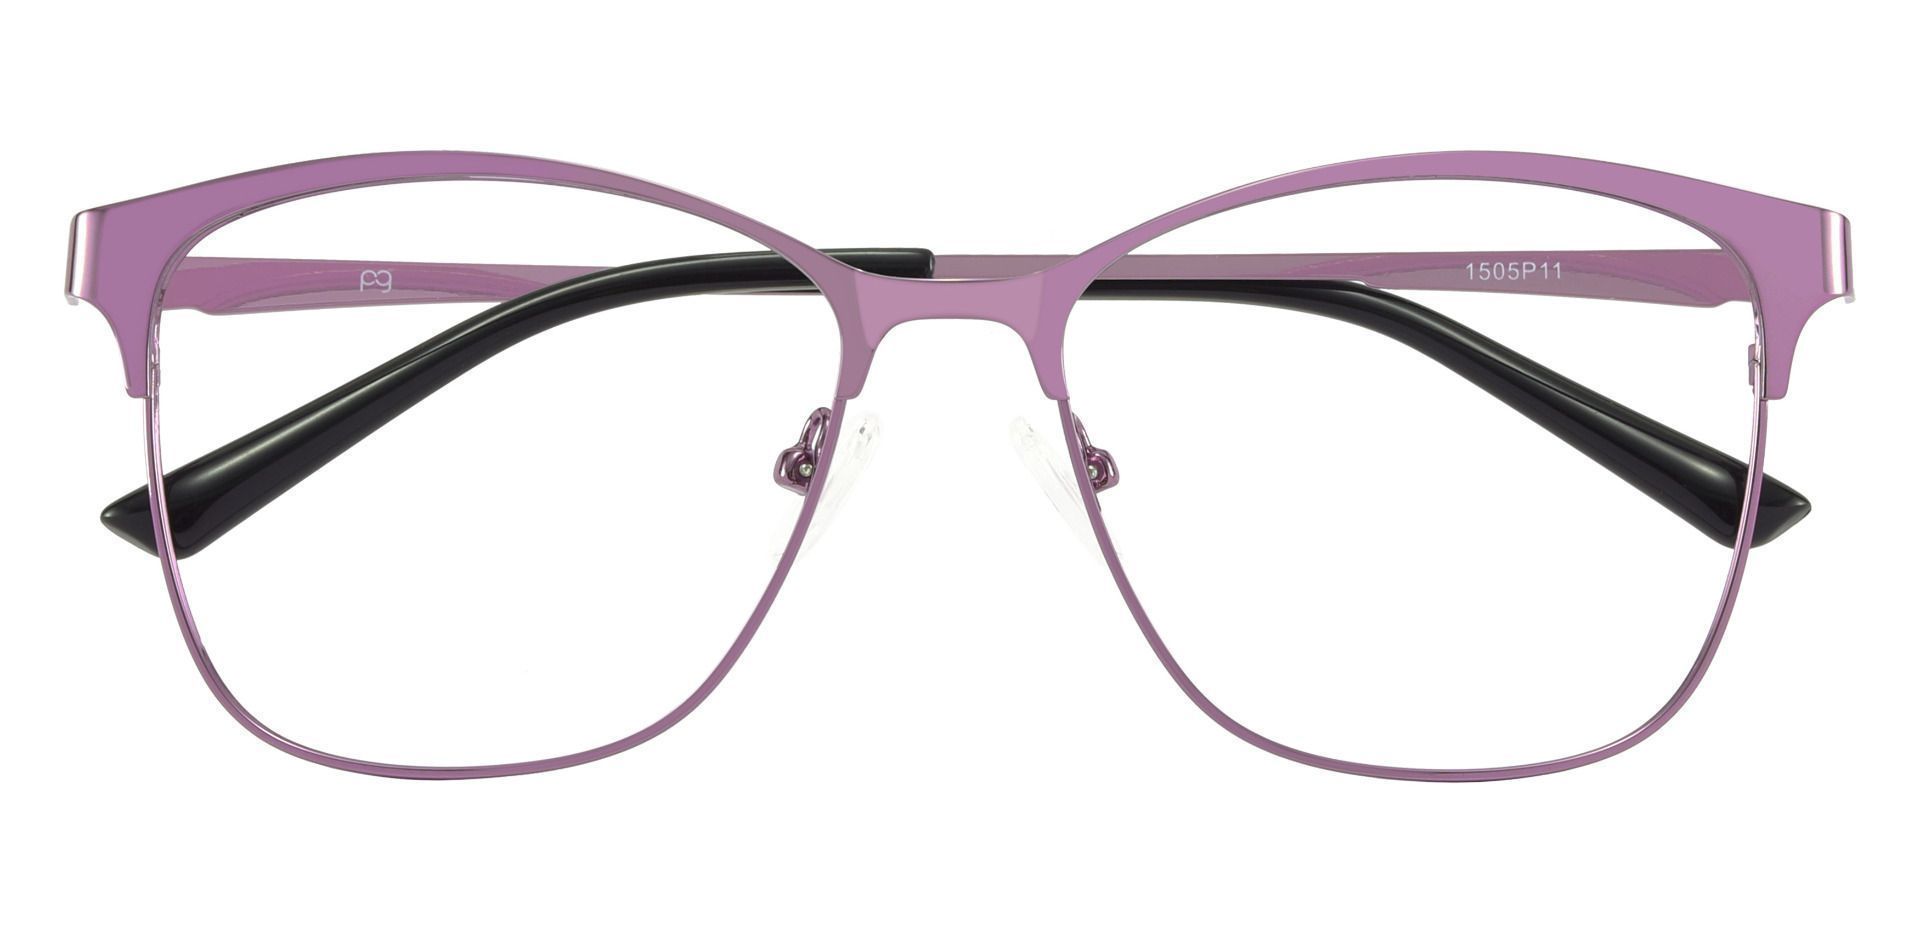 Briony Square Reading Glasses - Purple